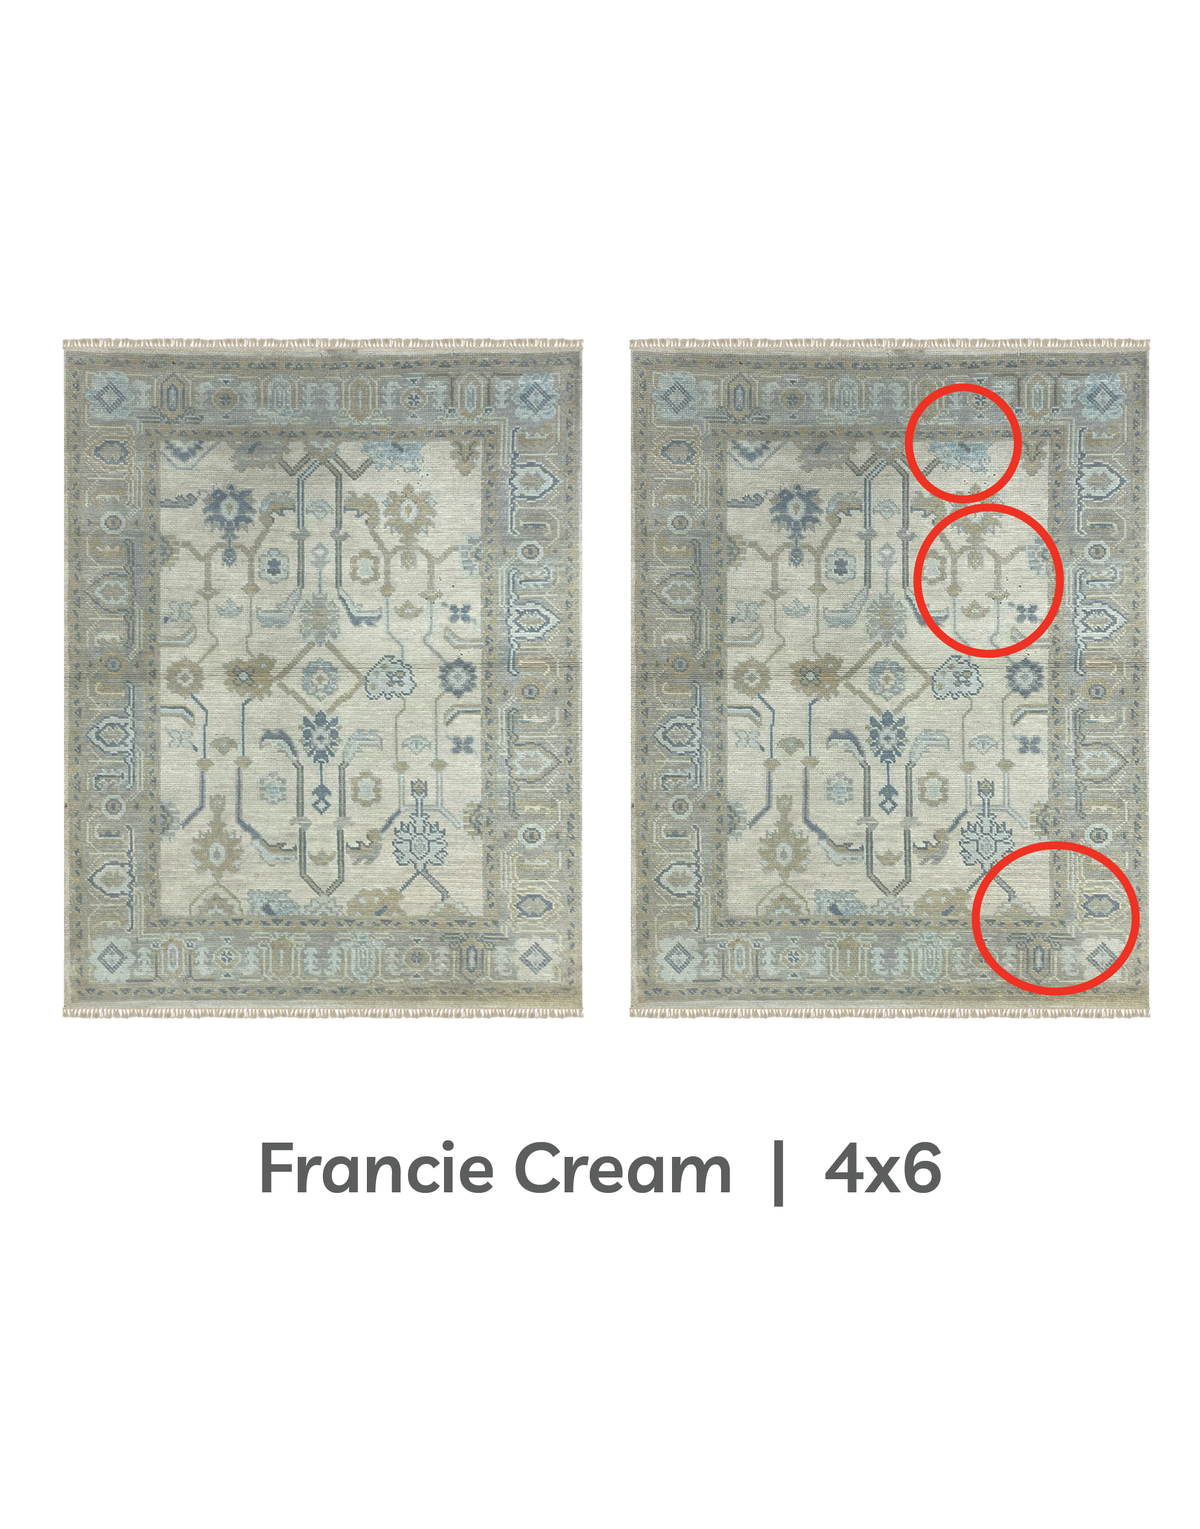 francie cream | final sale